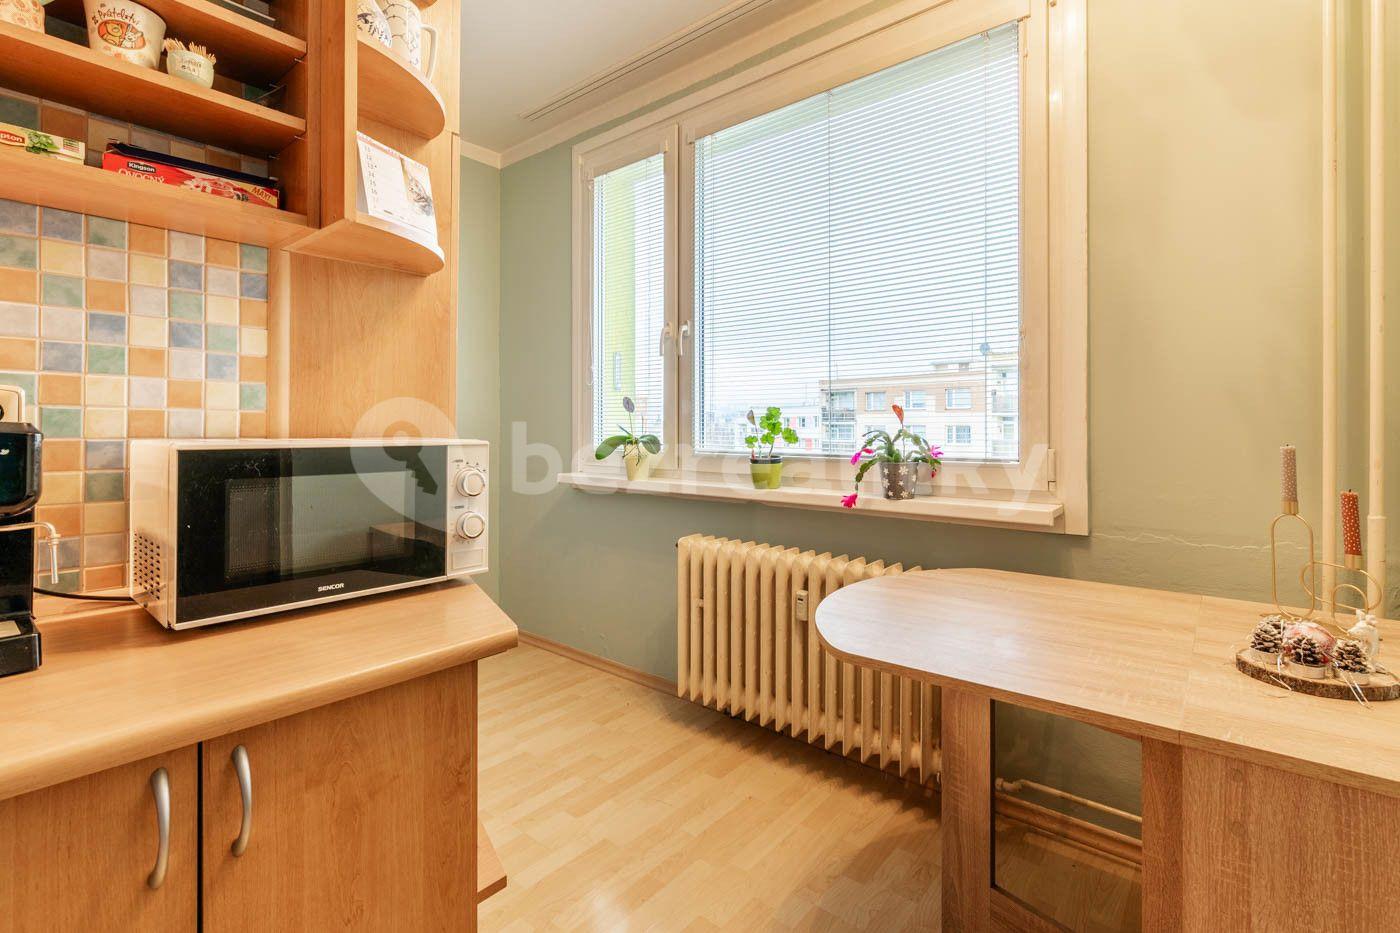 3 bedroom flat for sale, 66 m², Lužická, Jablonec nad Nisou, Liberecký Region